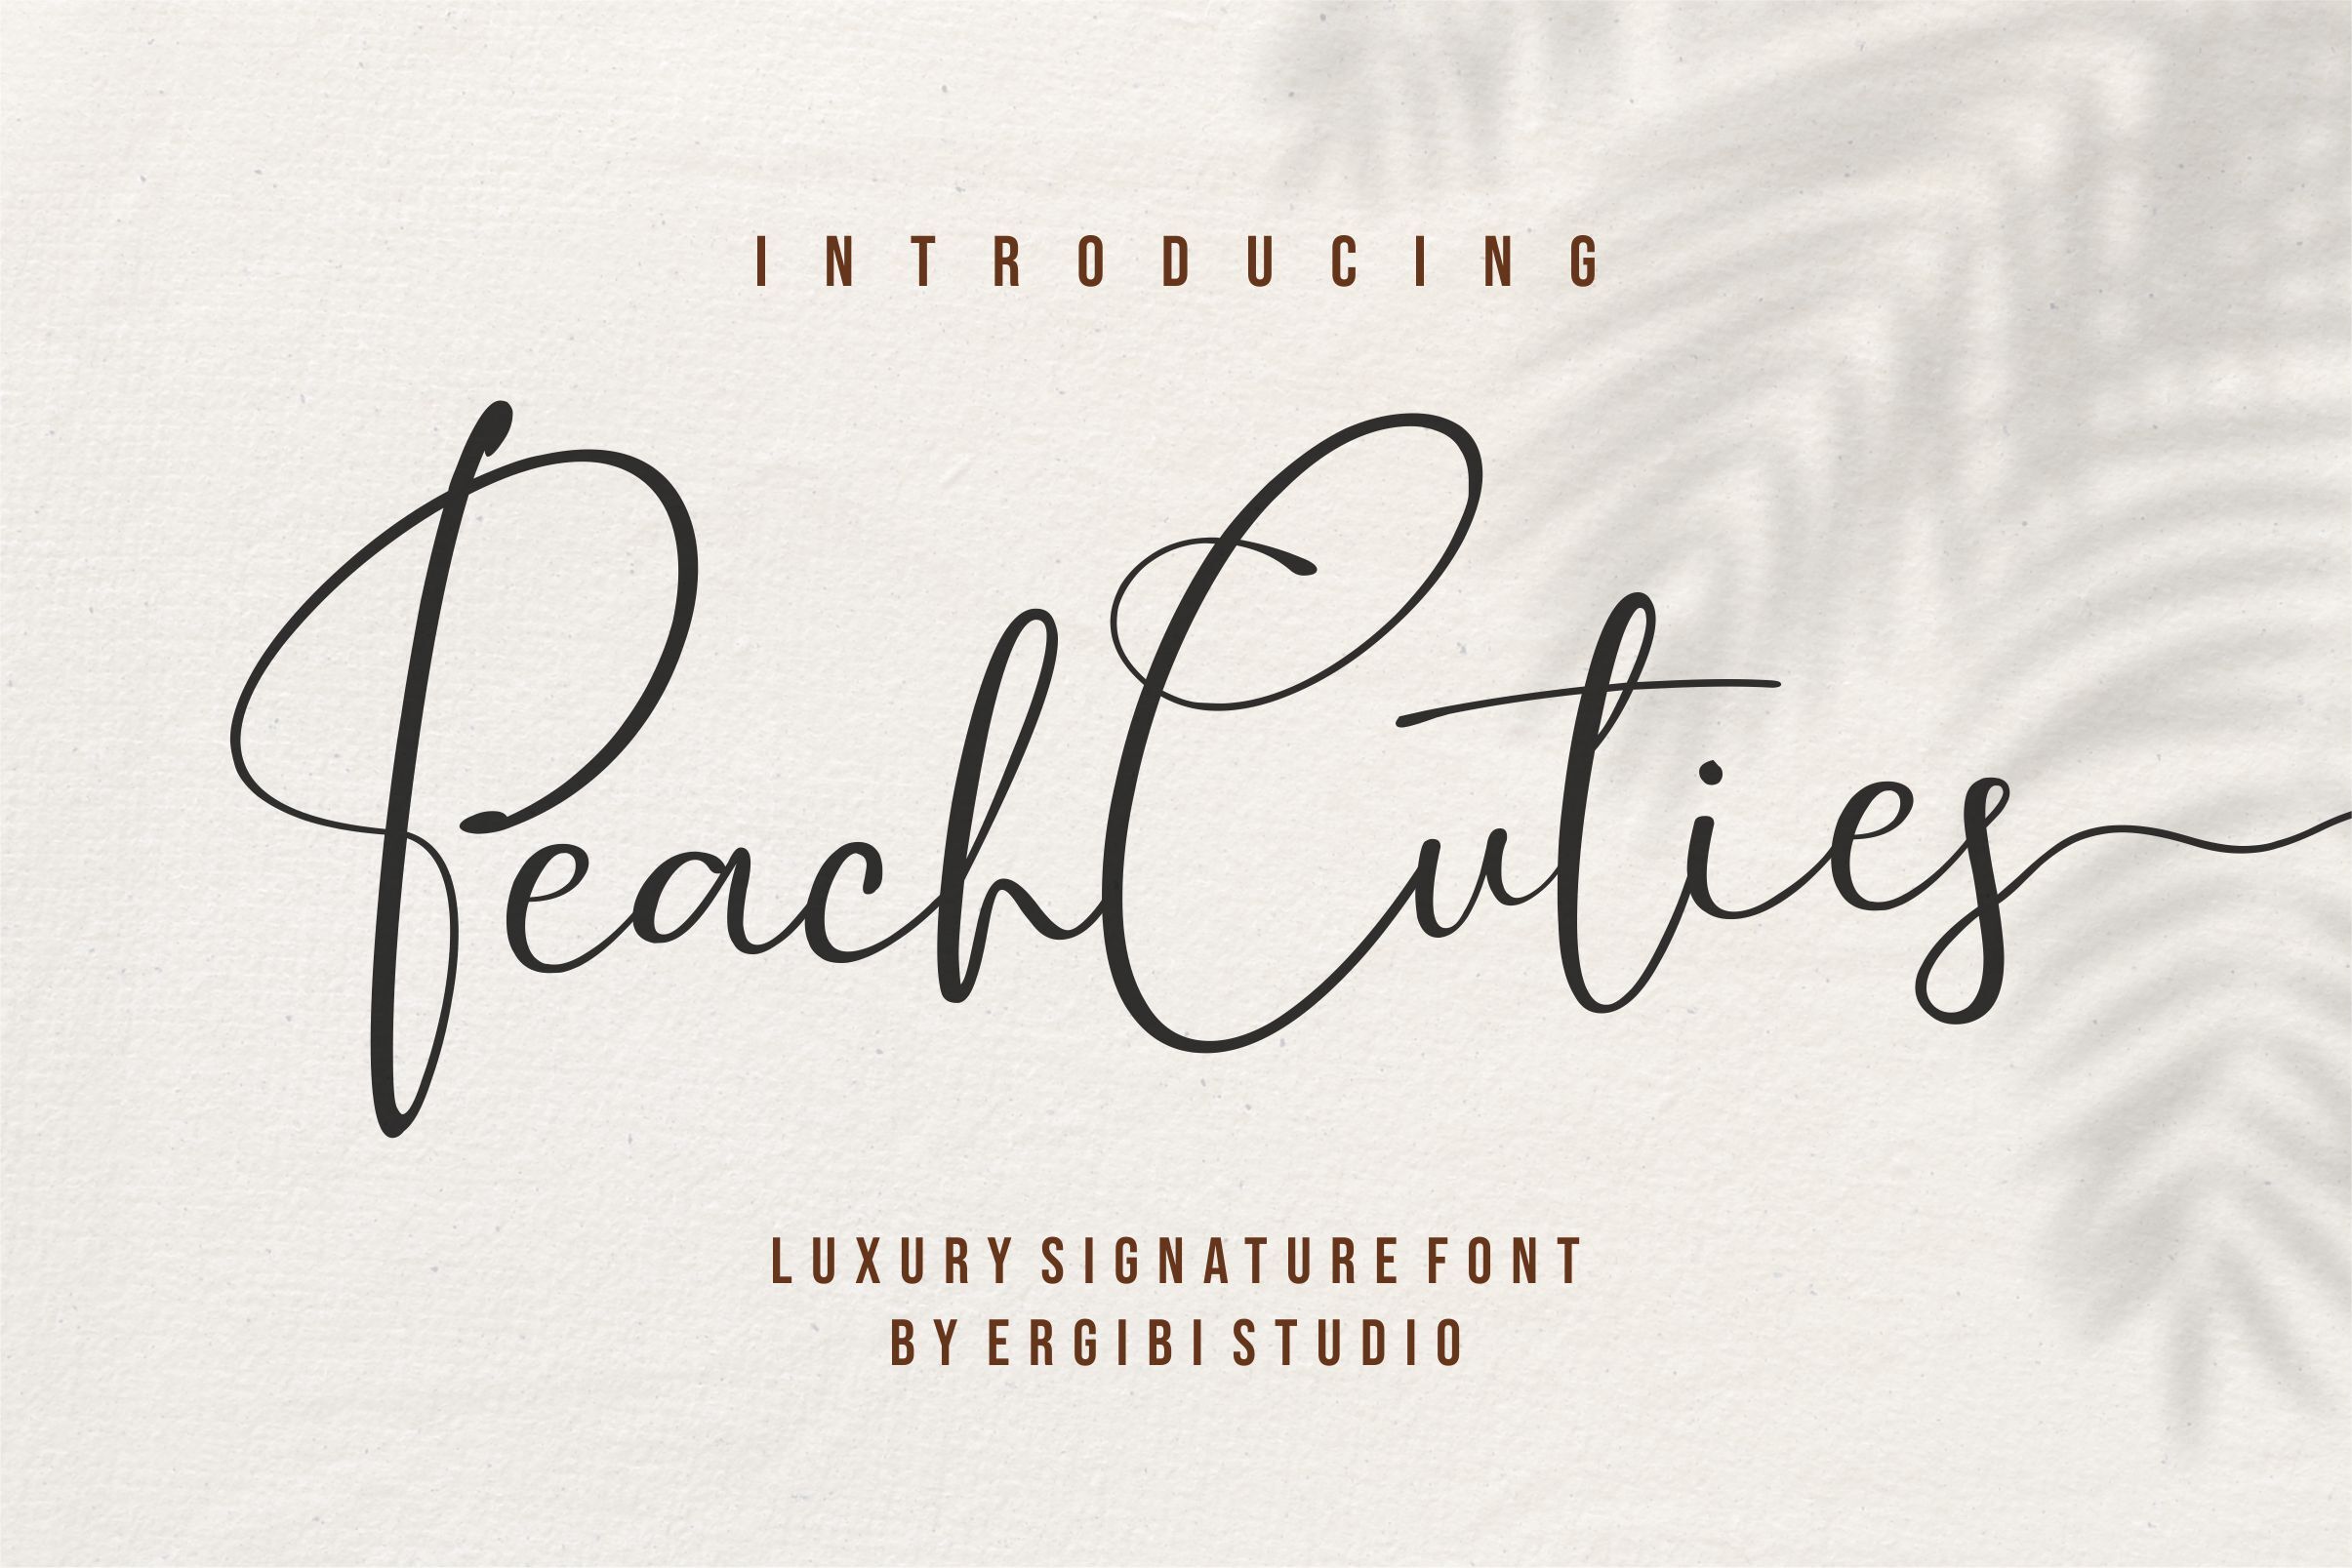 Peach Cuties Luxury Signature Font By Ergibi Studio Thehungryjpeg Com